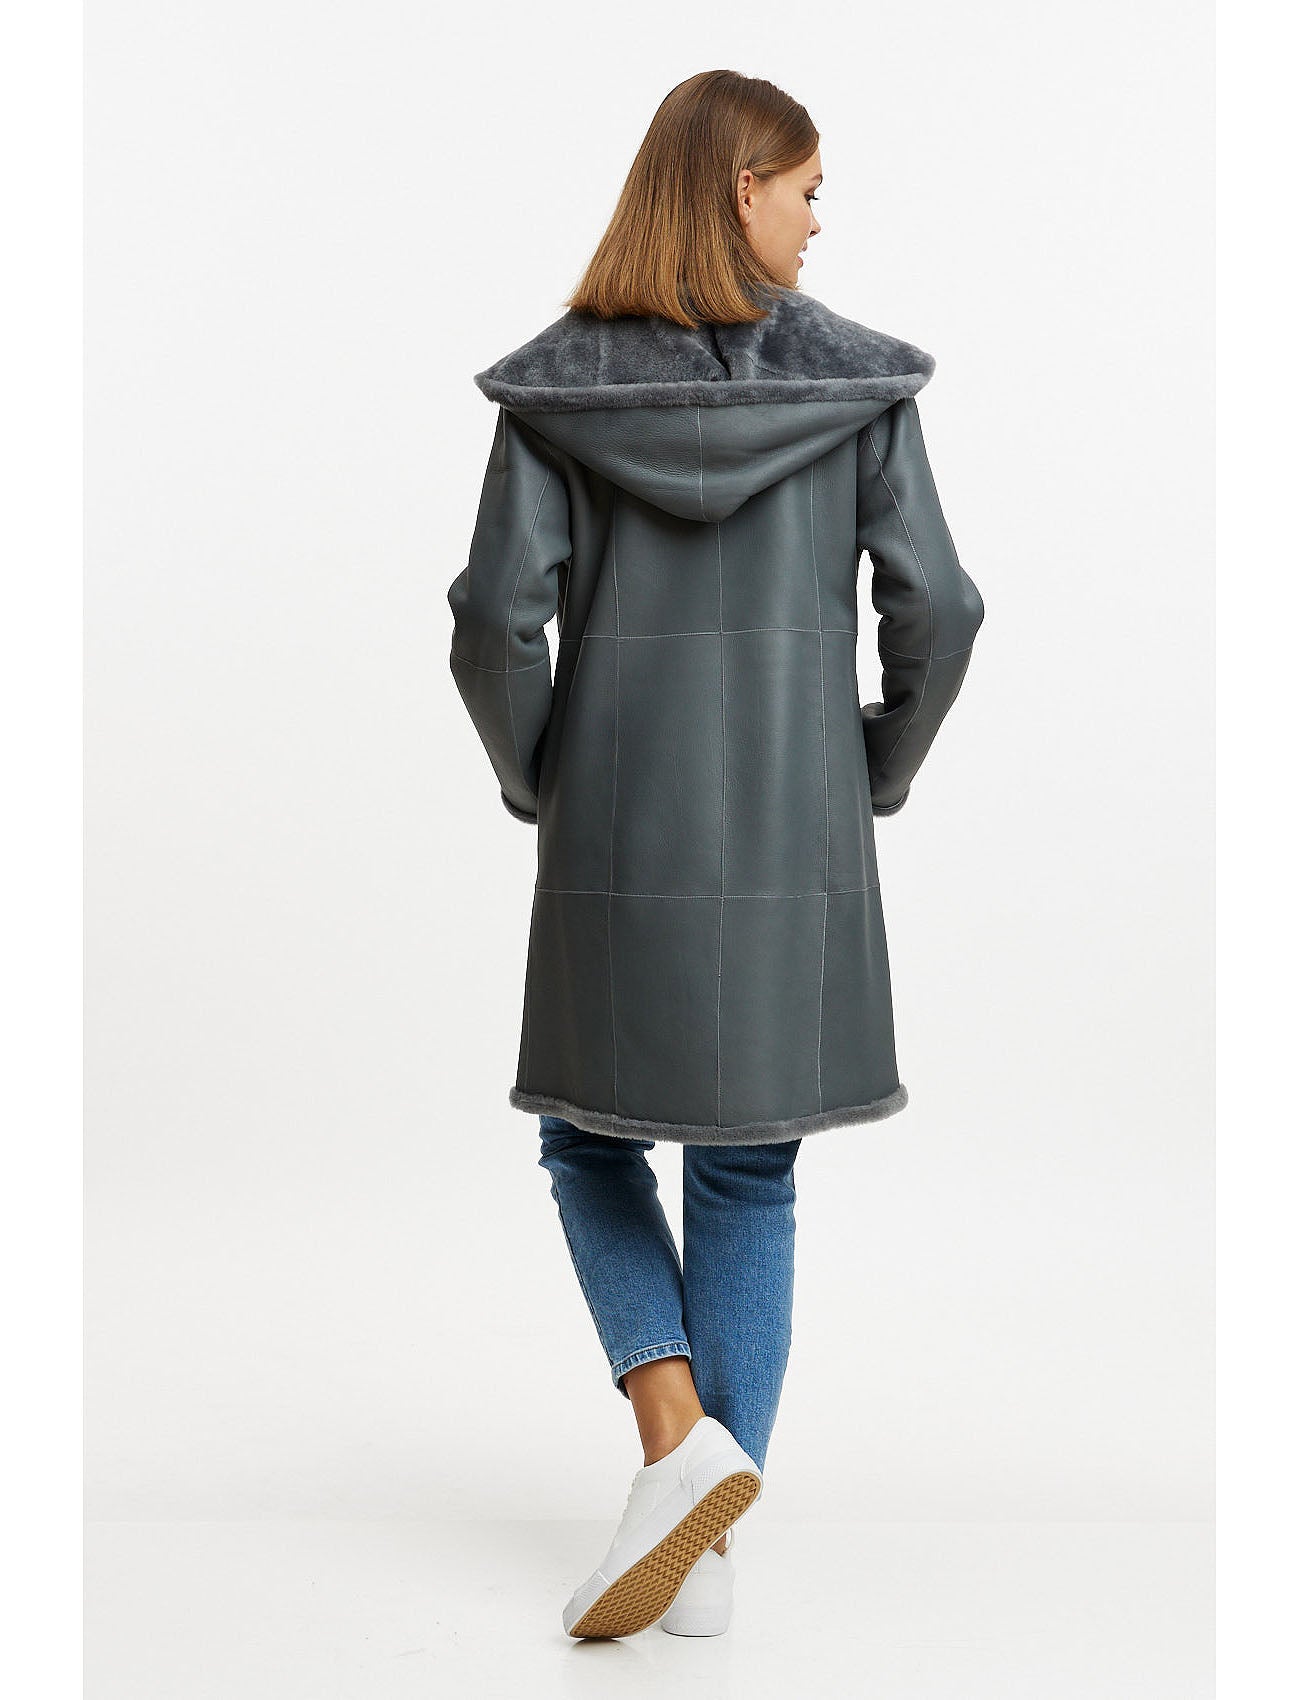 Merino lambskin jacket reversible 2in1 - grey